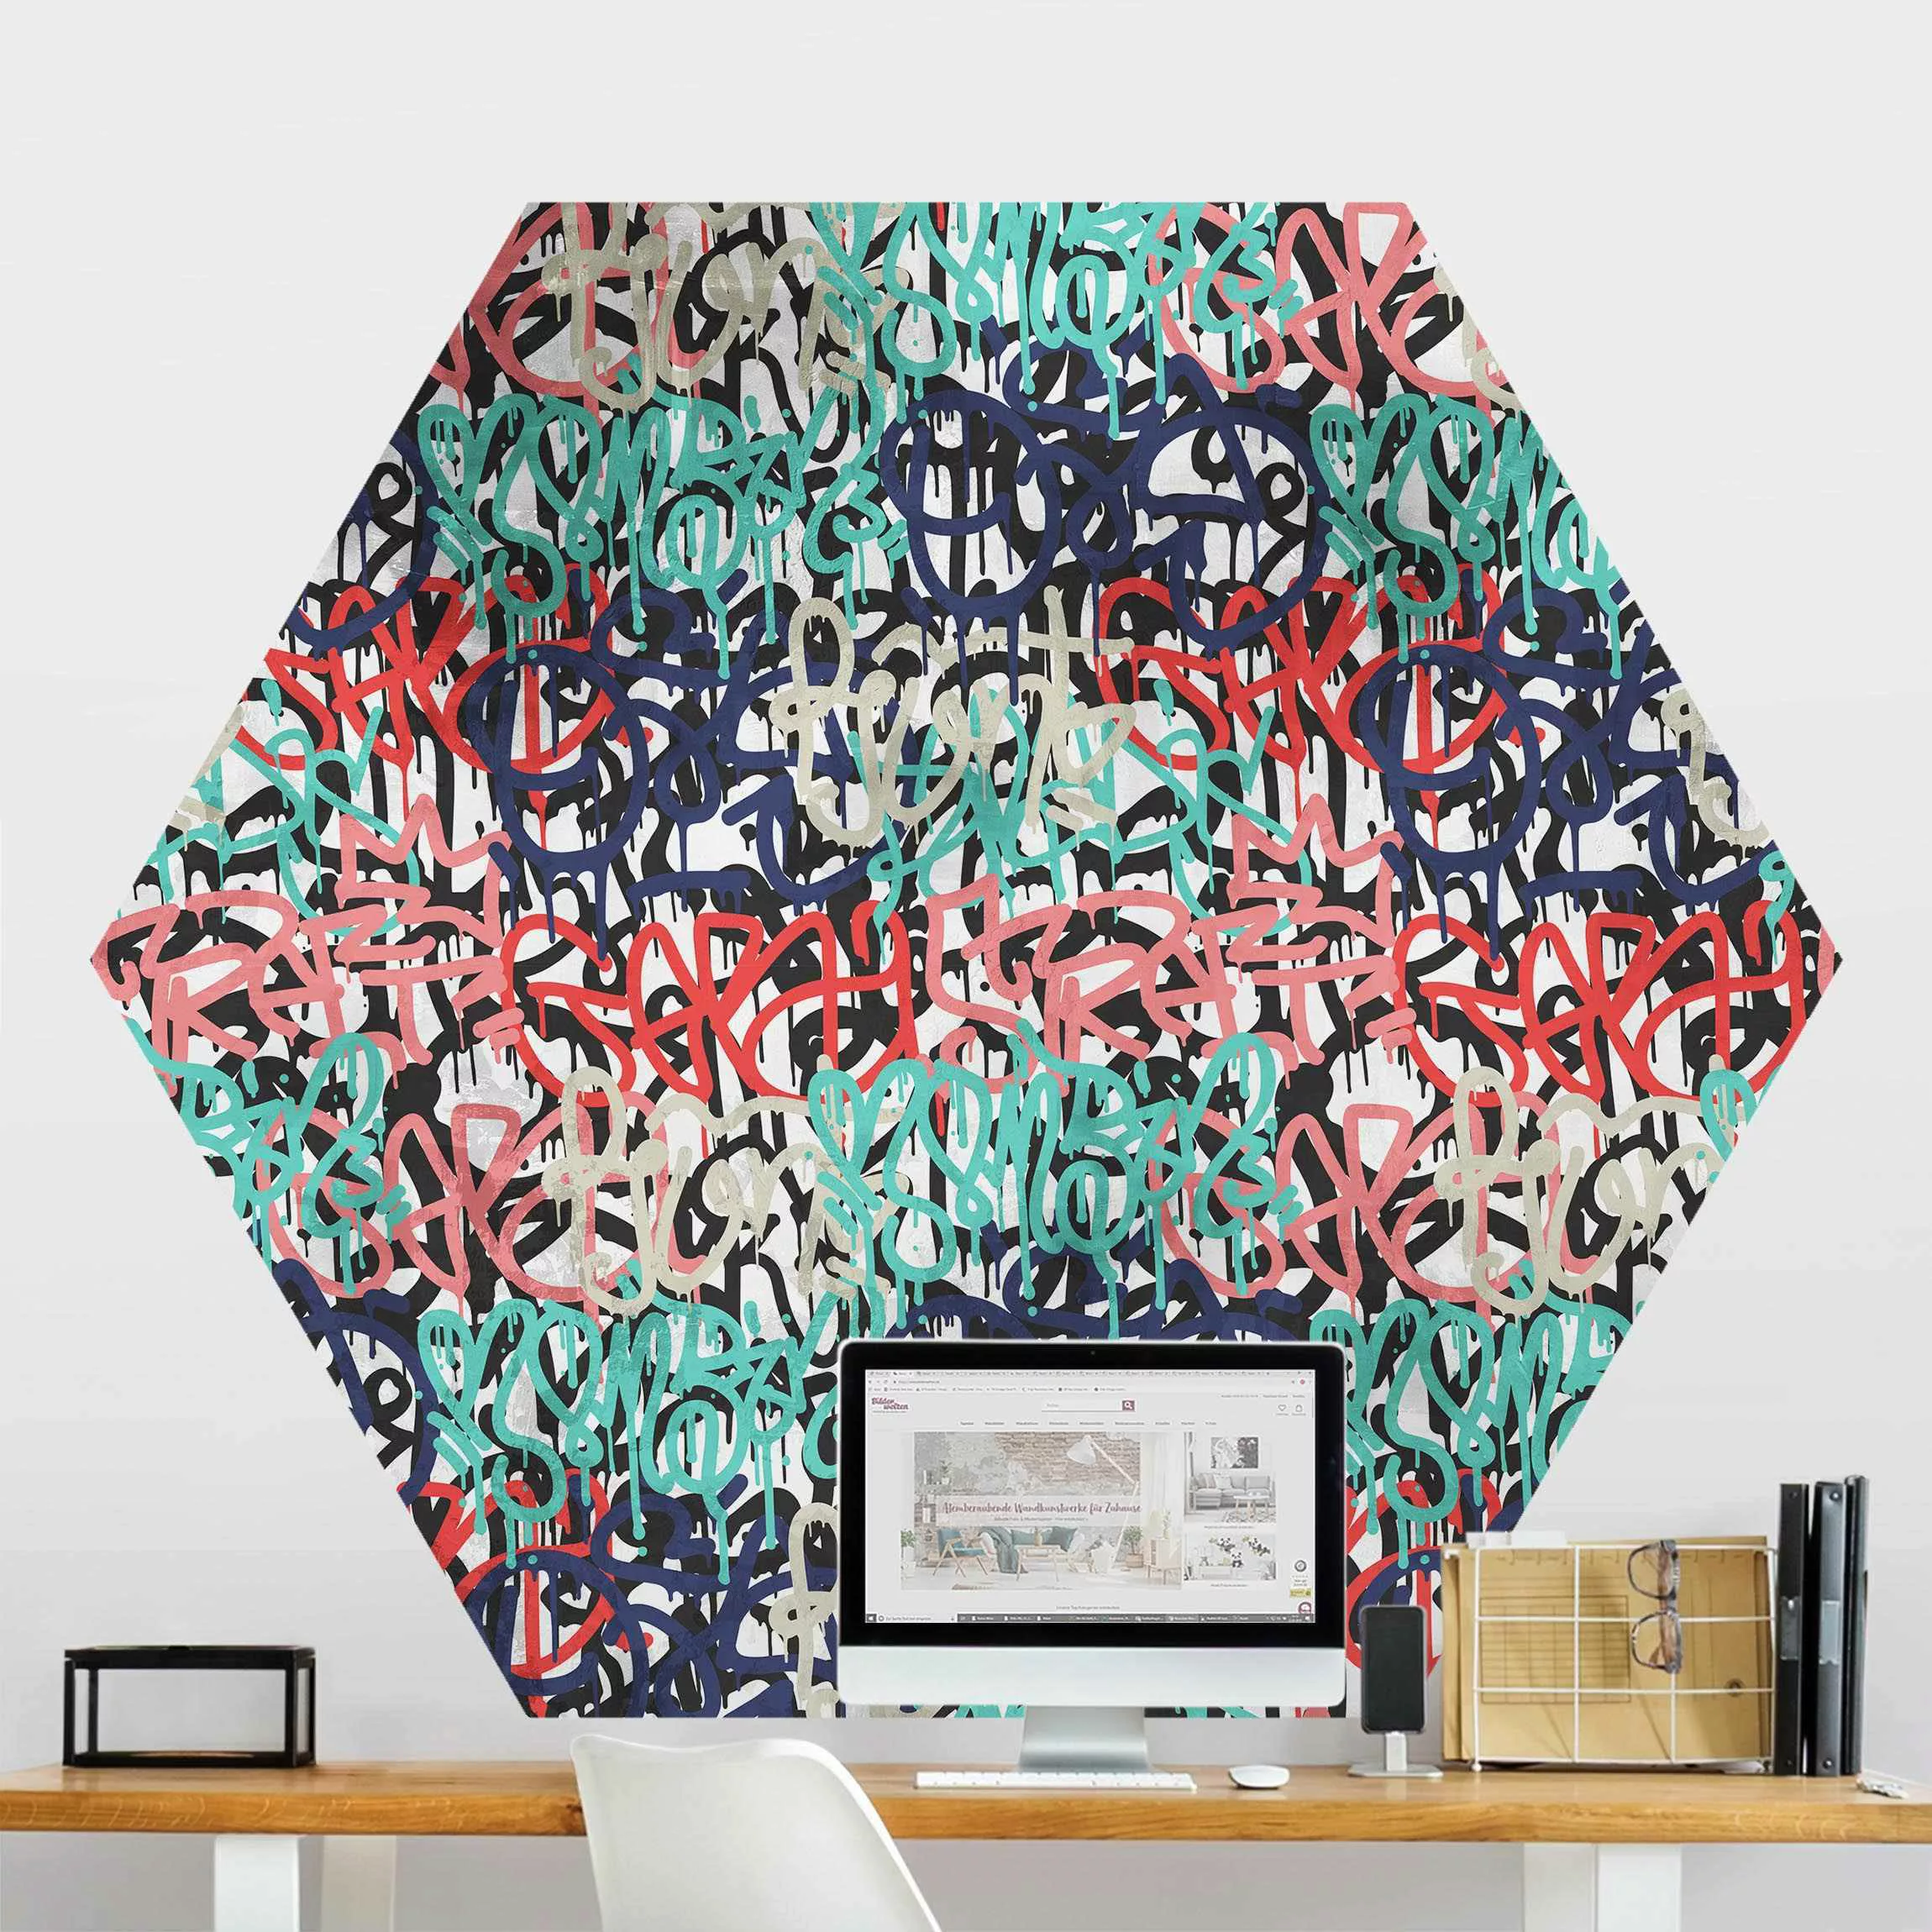 Hexagon Mustertapete selbstklebend Graffiti Art Tagged Wall günstig online kaufen